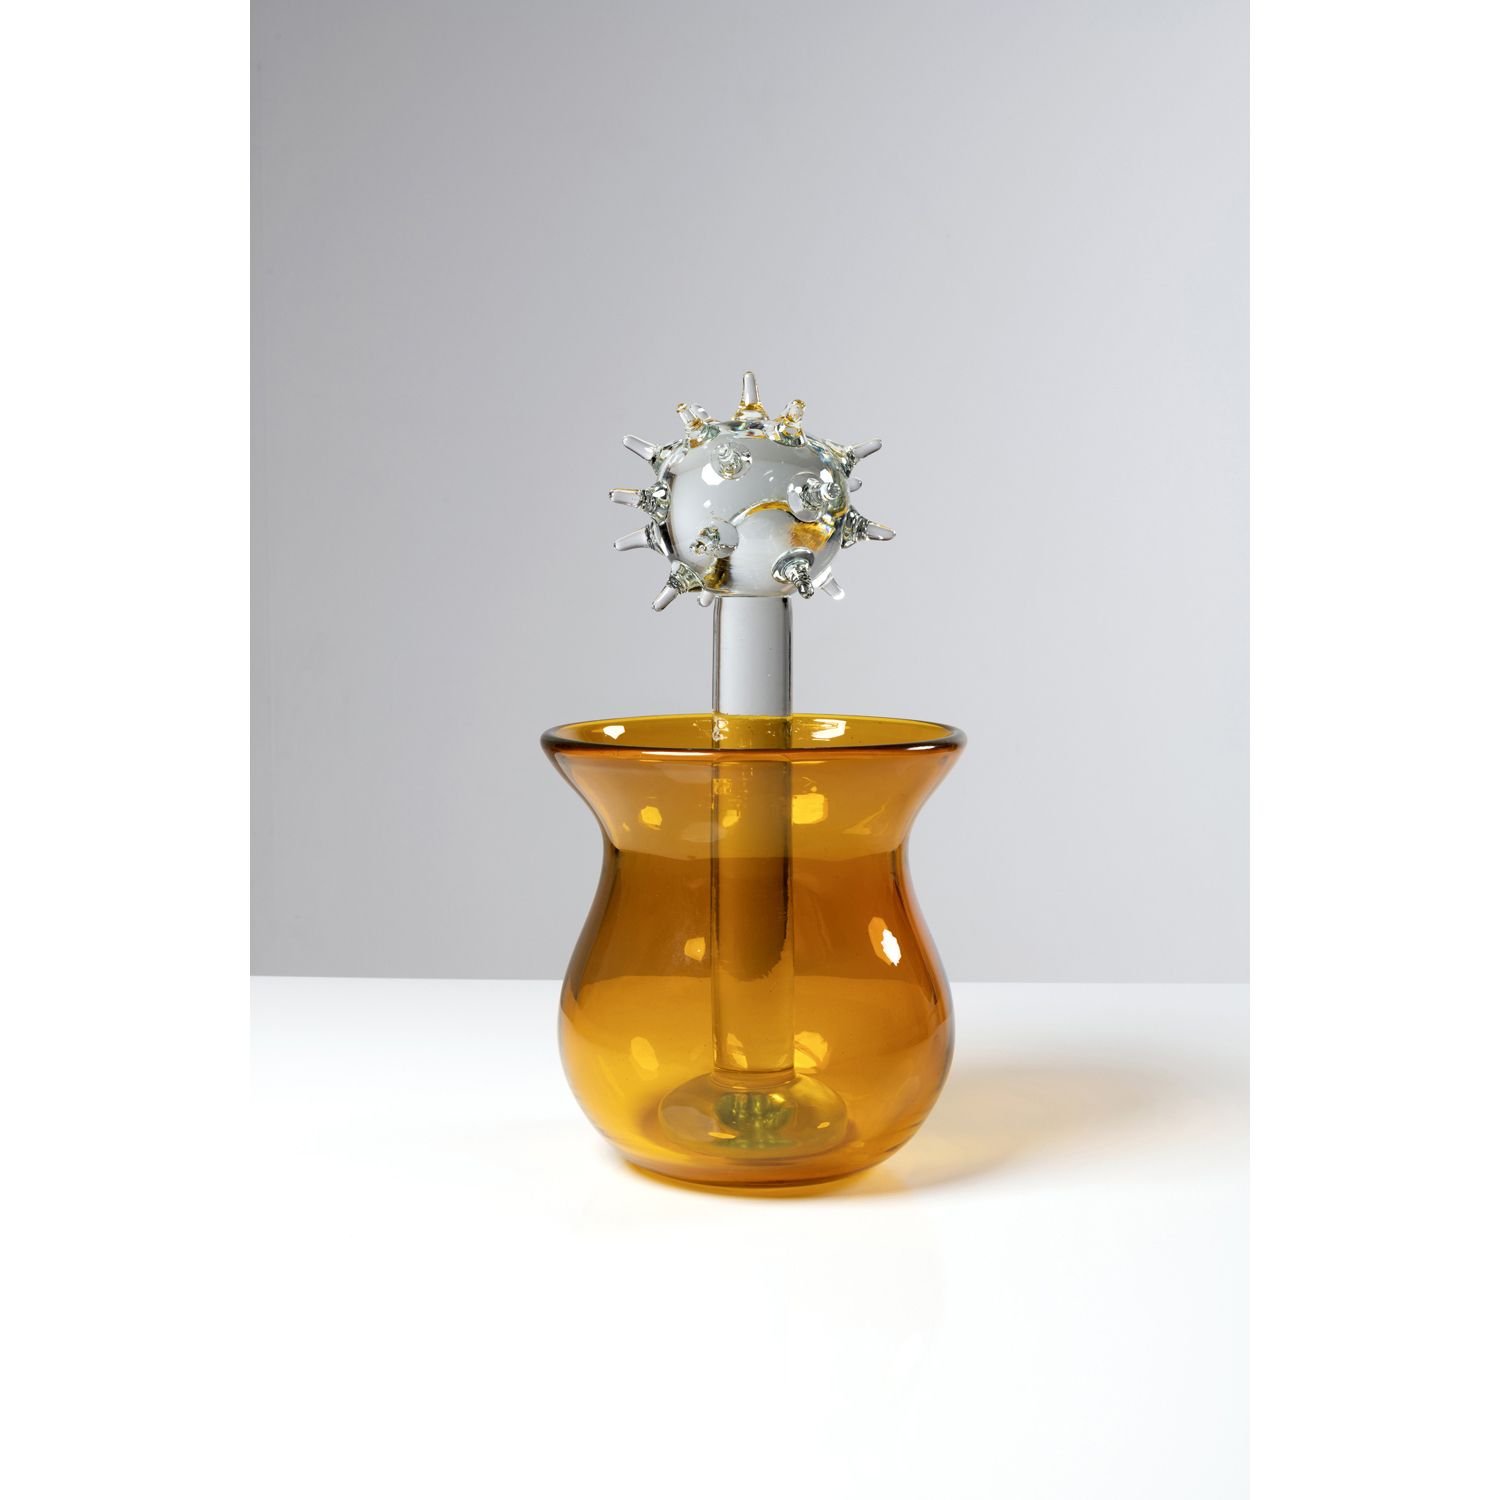 Null 马夏尔-贝罗（生于1952年

雕塑花瓶

手工吹制的玻璃

CIRVA版

2000年左右创建的模型

高 46 × 25 Ø cm

注：马夏尔-&hellip;